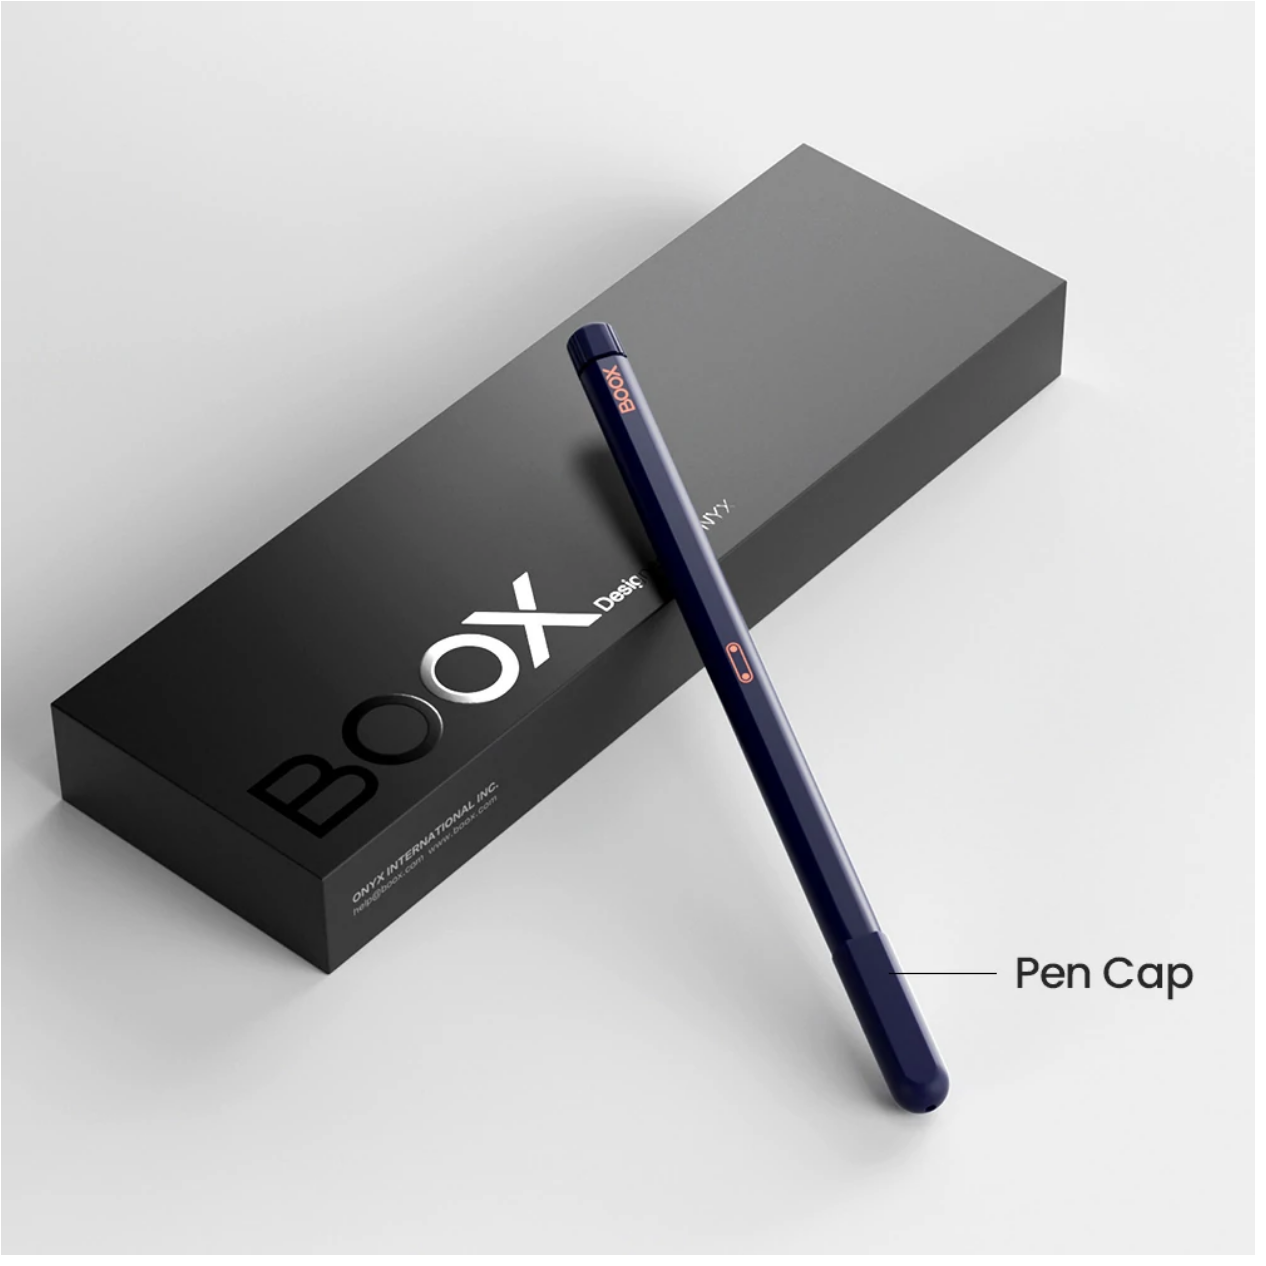 Onyx Boox Magnetic Pen 2 Pro